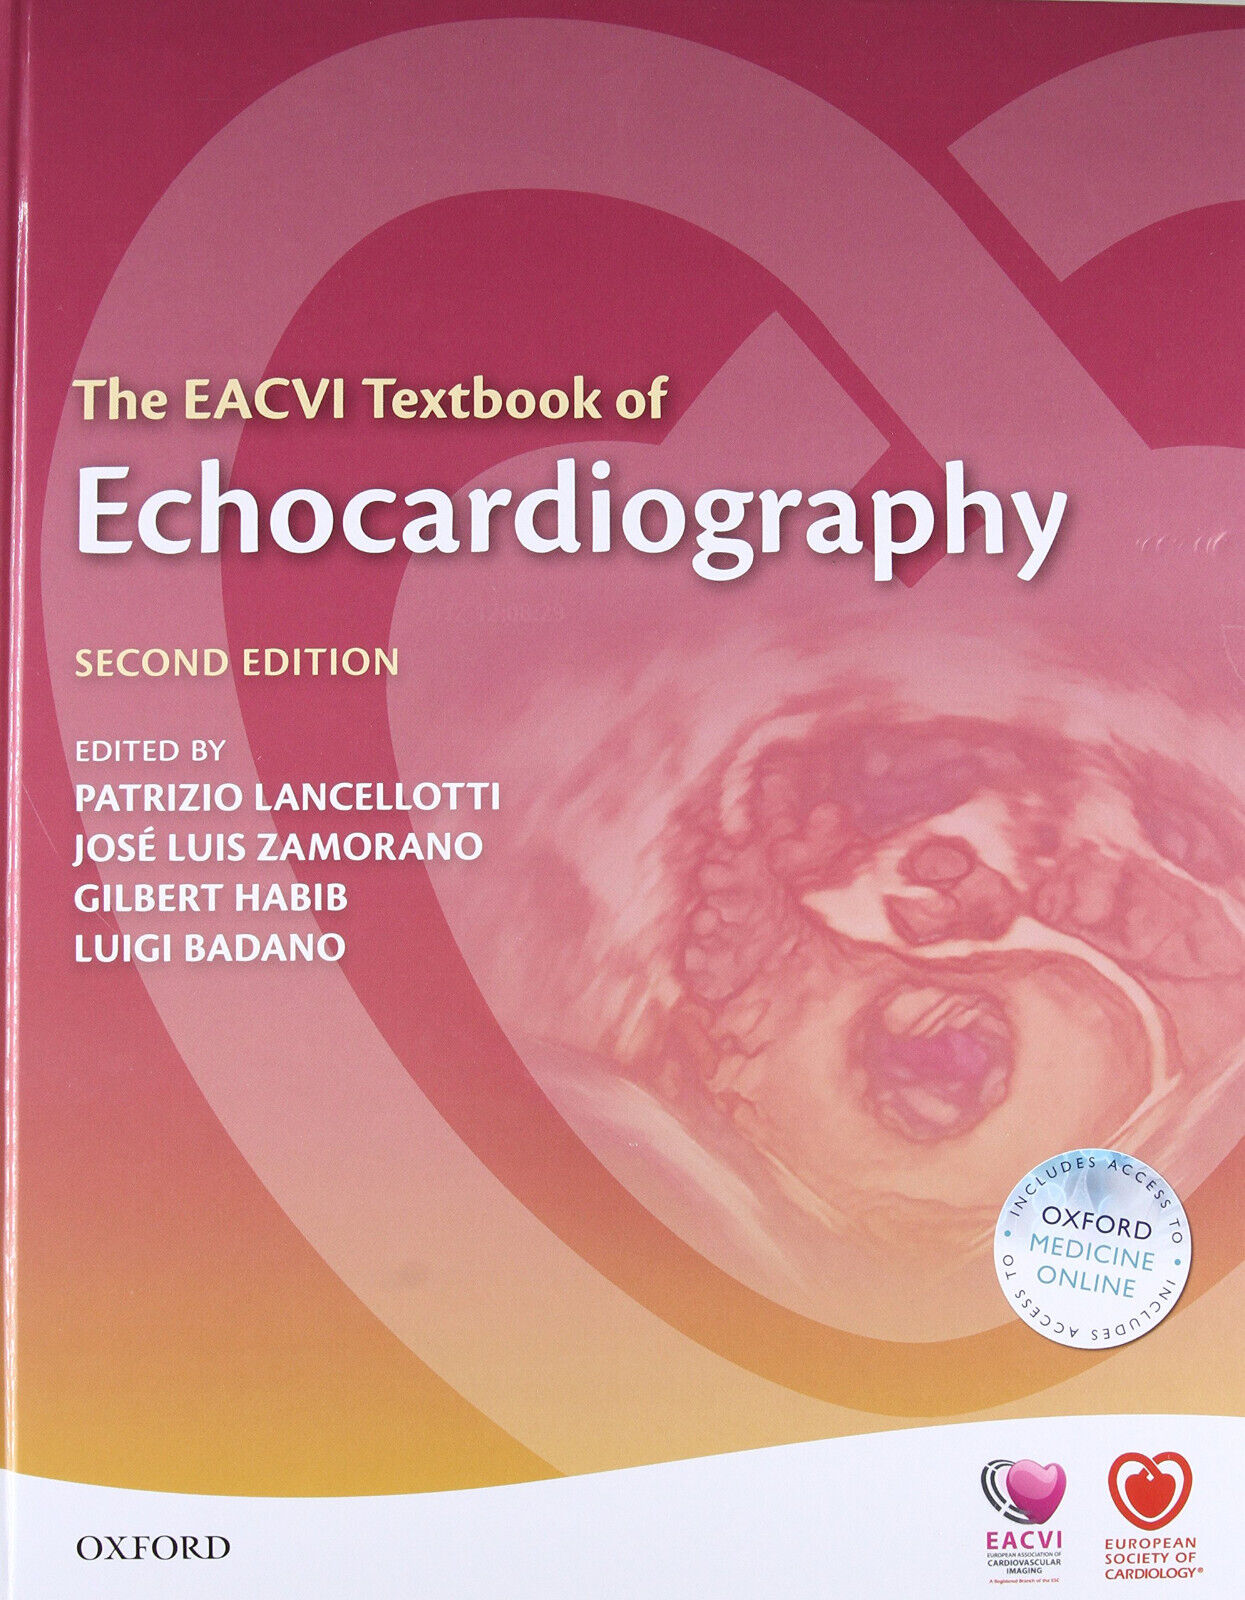 The EACVI Textbook of Echocardiography - Patrizio Lancellotti - Oxford, 2016